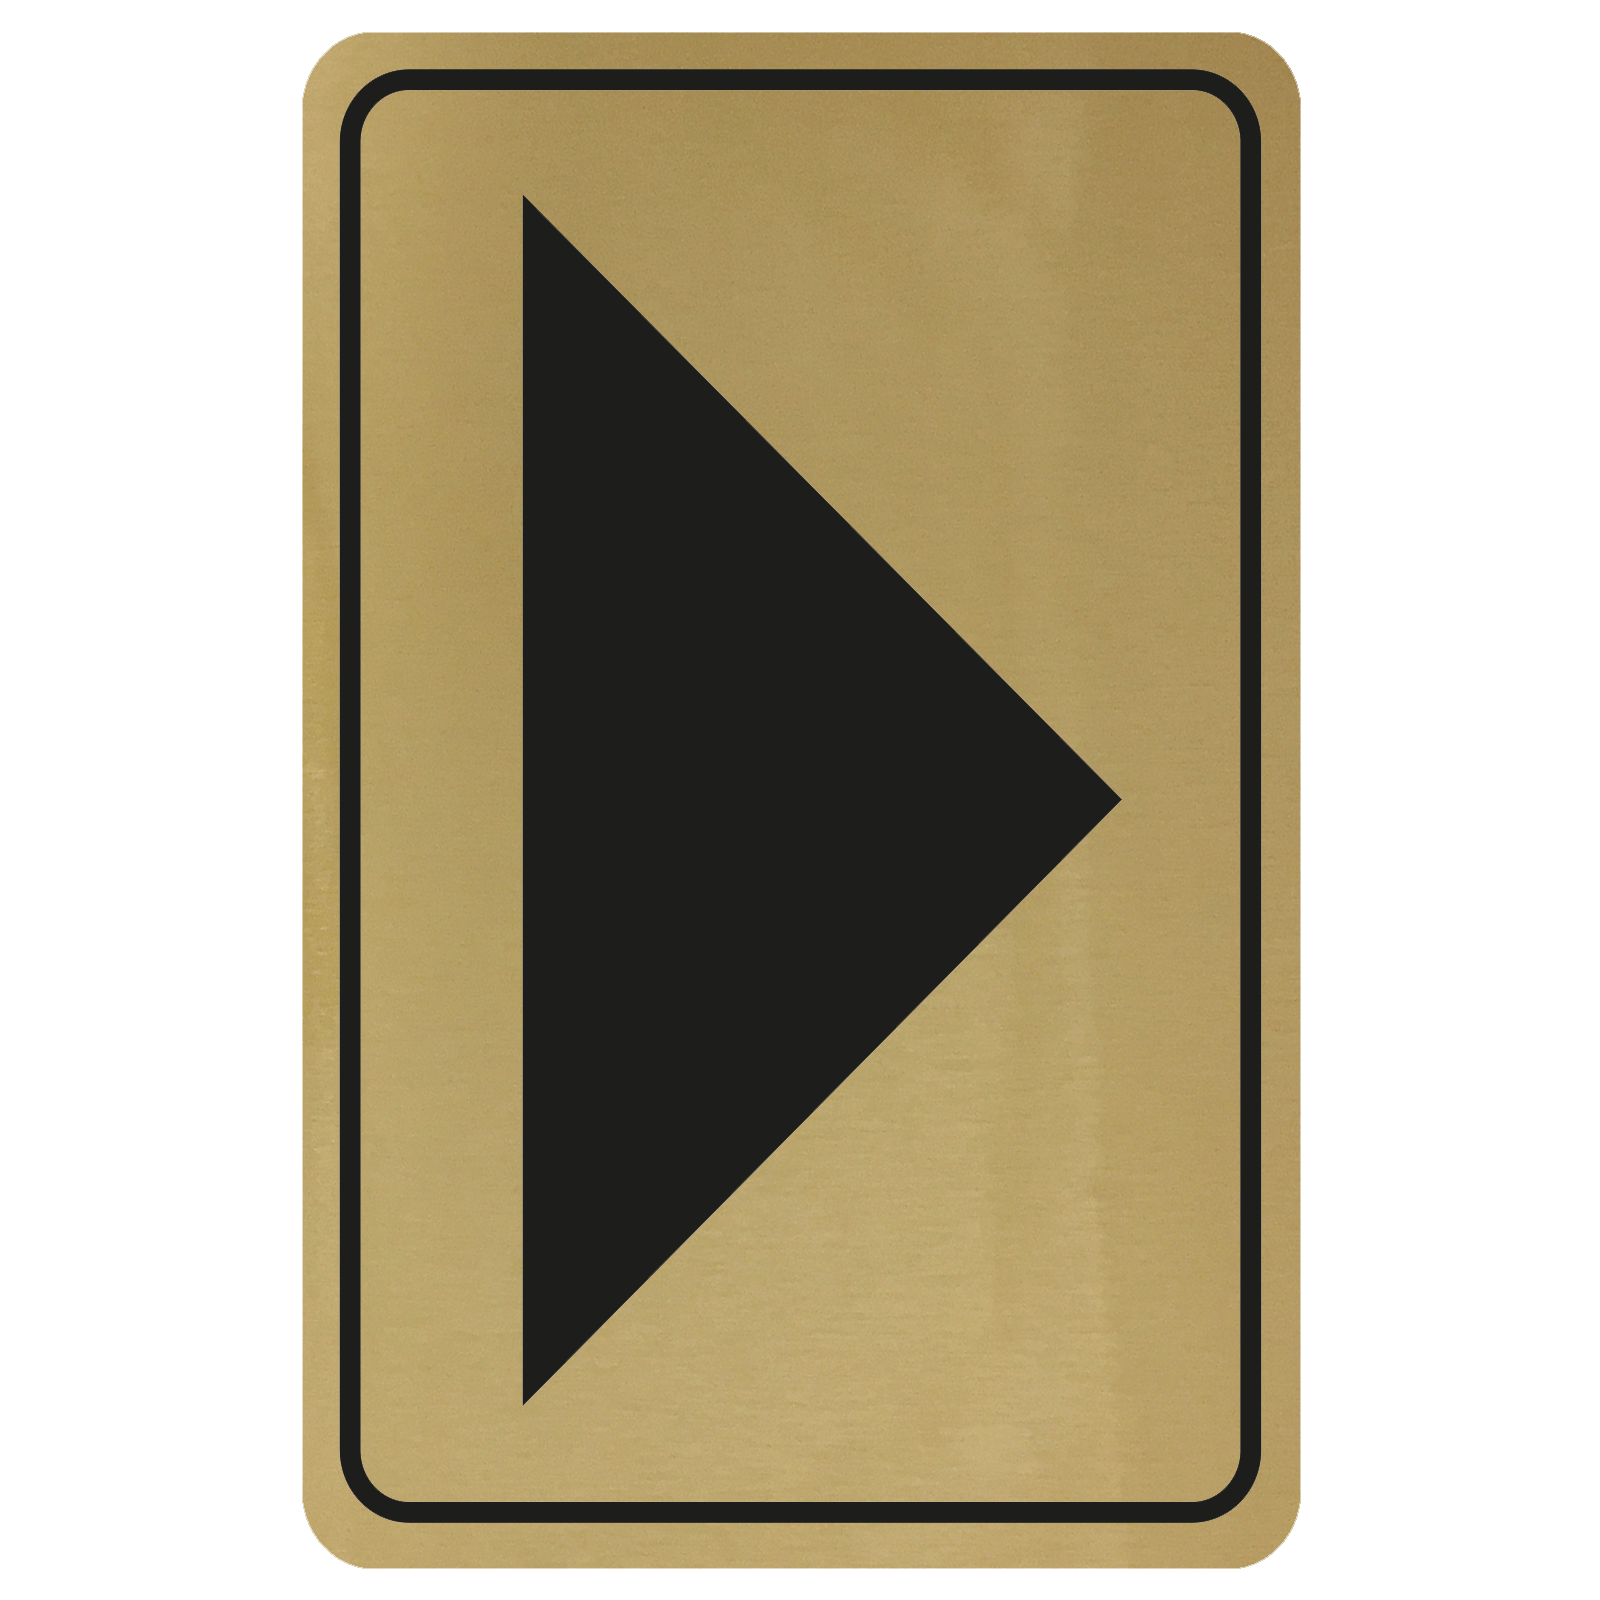 Large Arrow Door Sign - Black on Gold